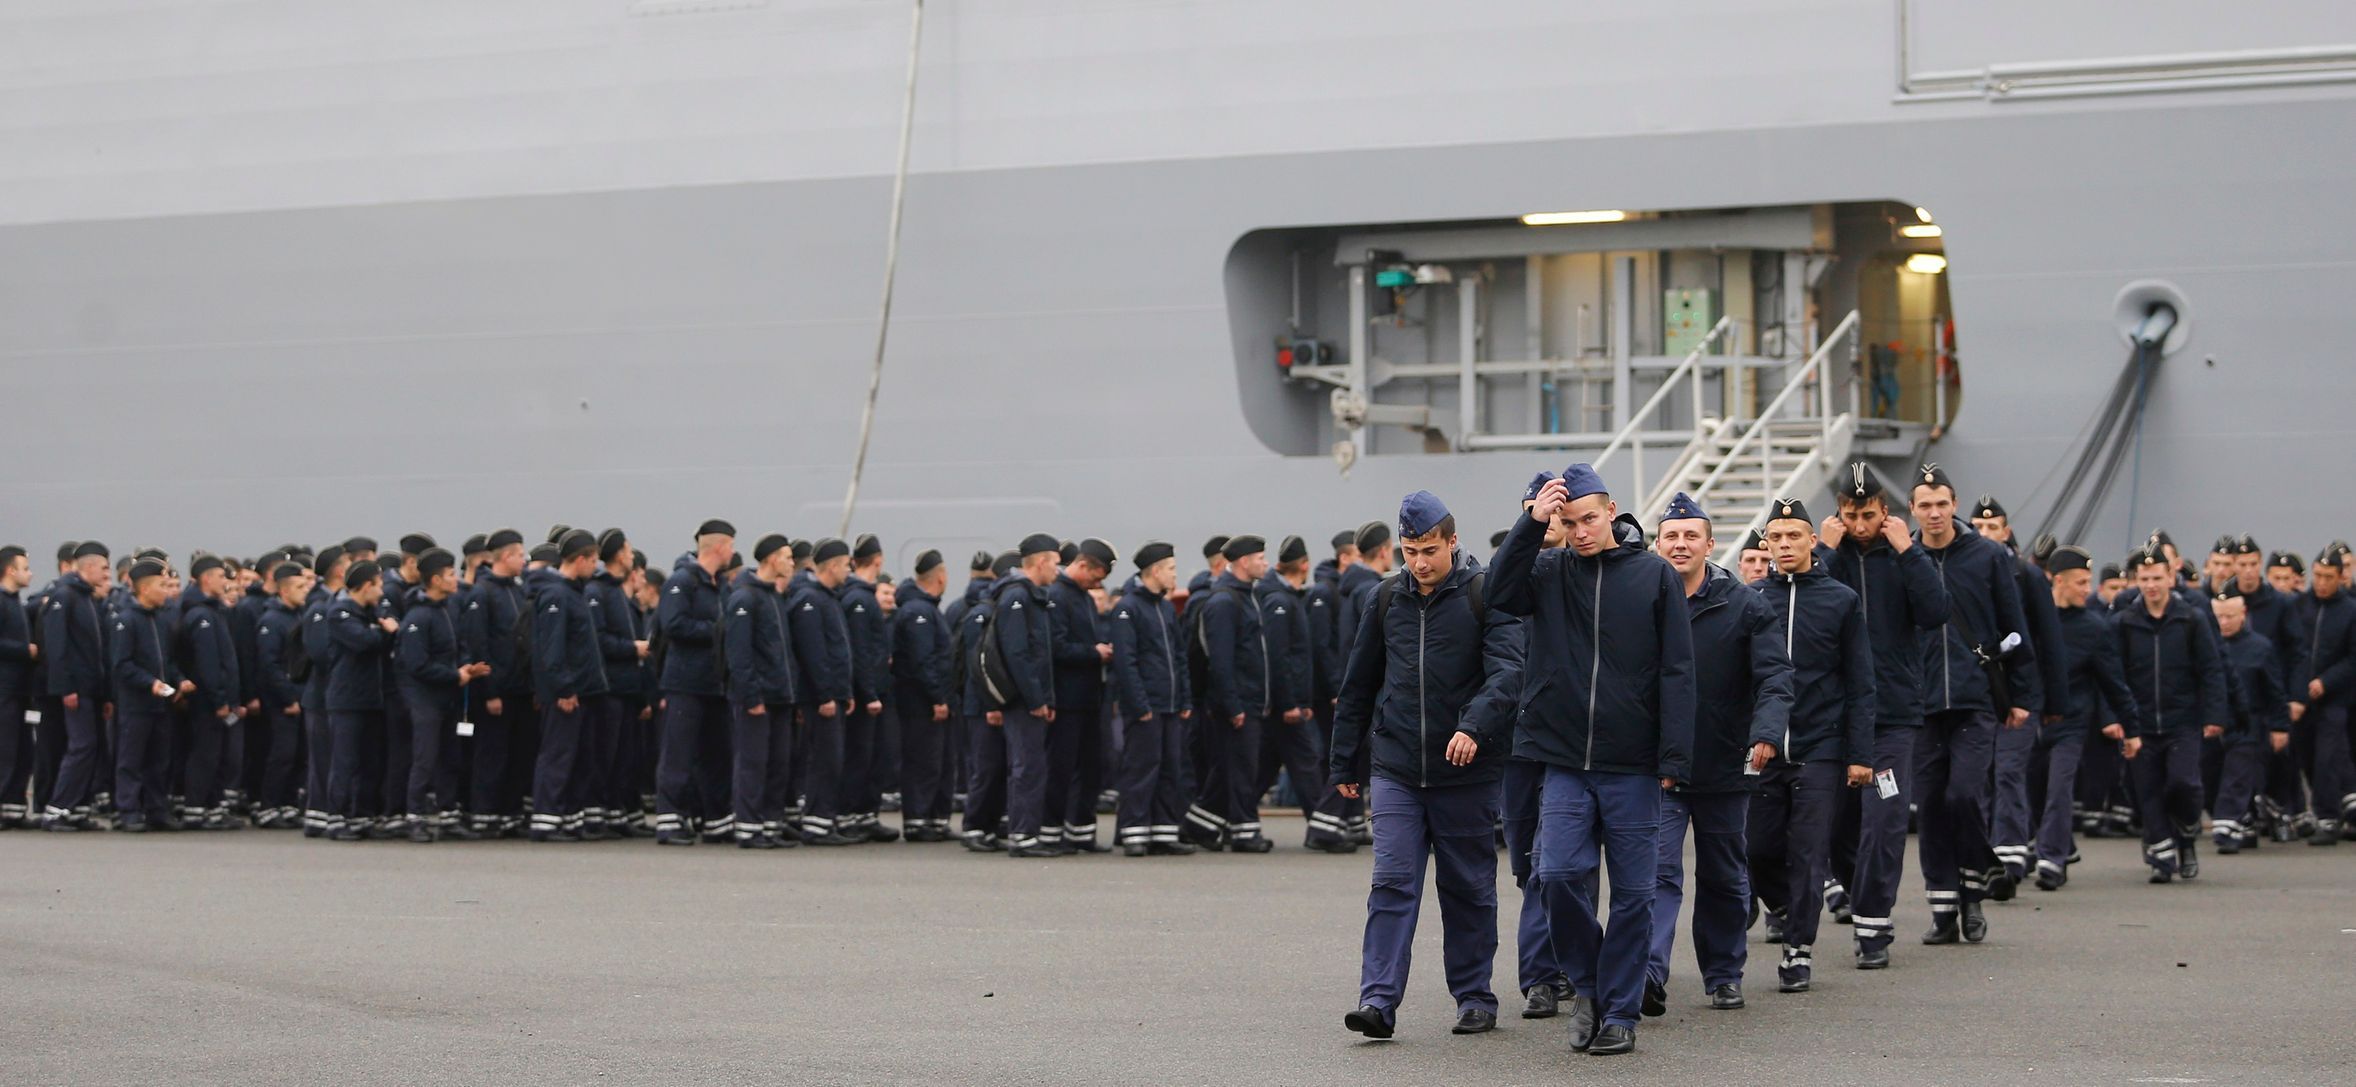 Russian sailors walk in front of the Mistral-class helicopter carrier Vladivostok at the STX Les Chantiers de l'Atlantique shipyard site in Saint-Nazaire